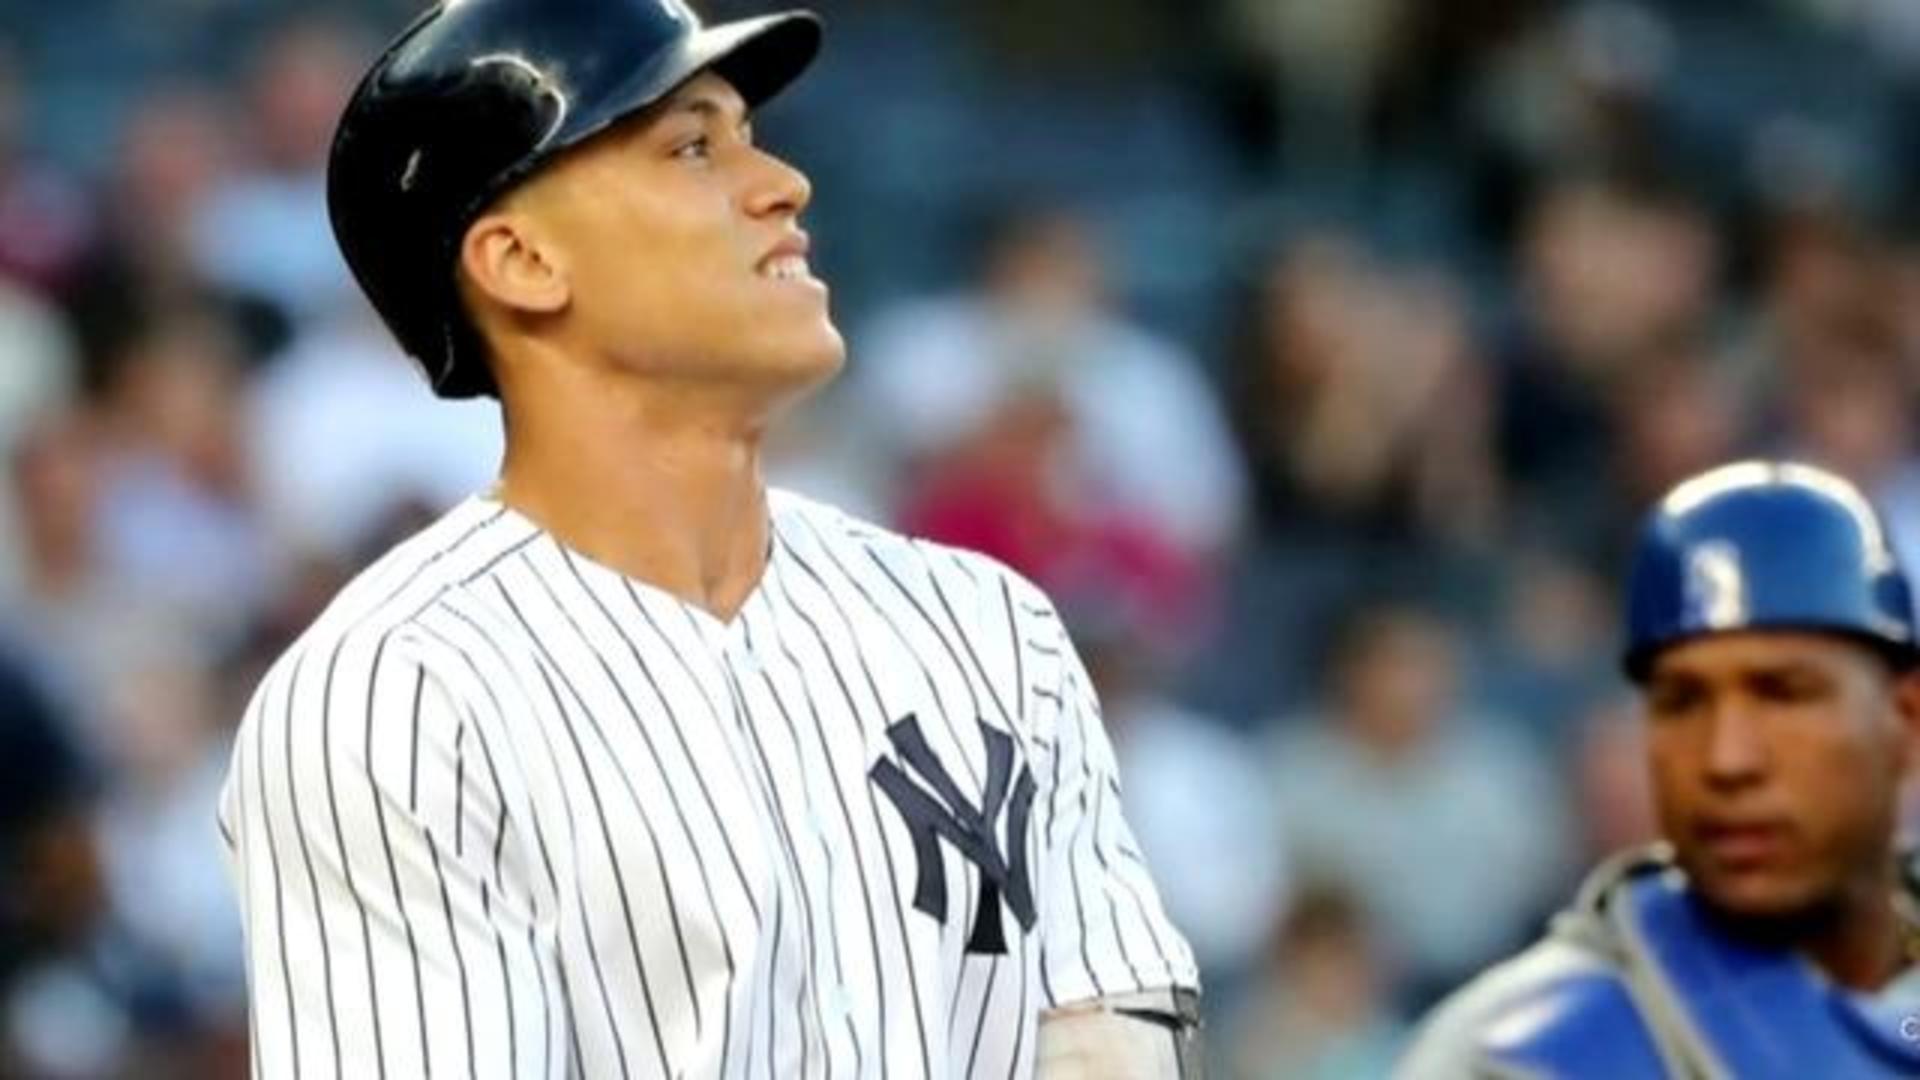 Yankees sluggers Aaron Judge, Gary Sanchez land on disabled list - CBS News